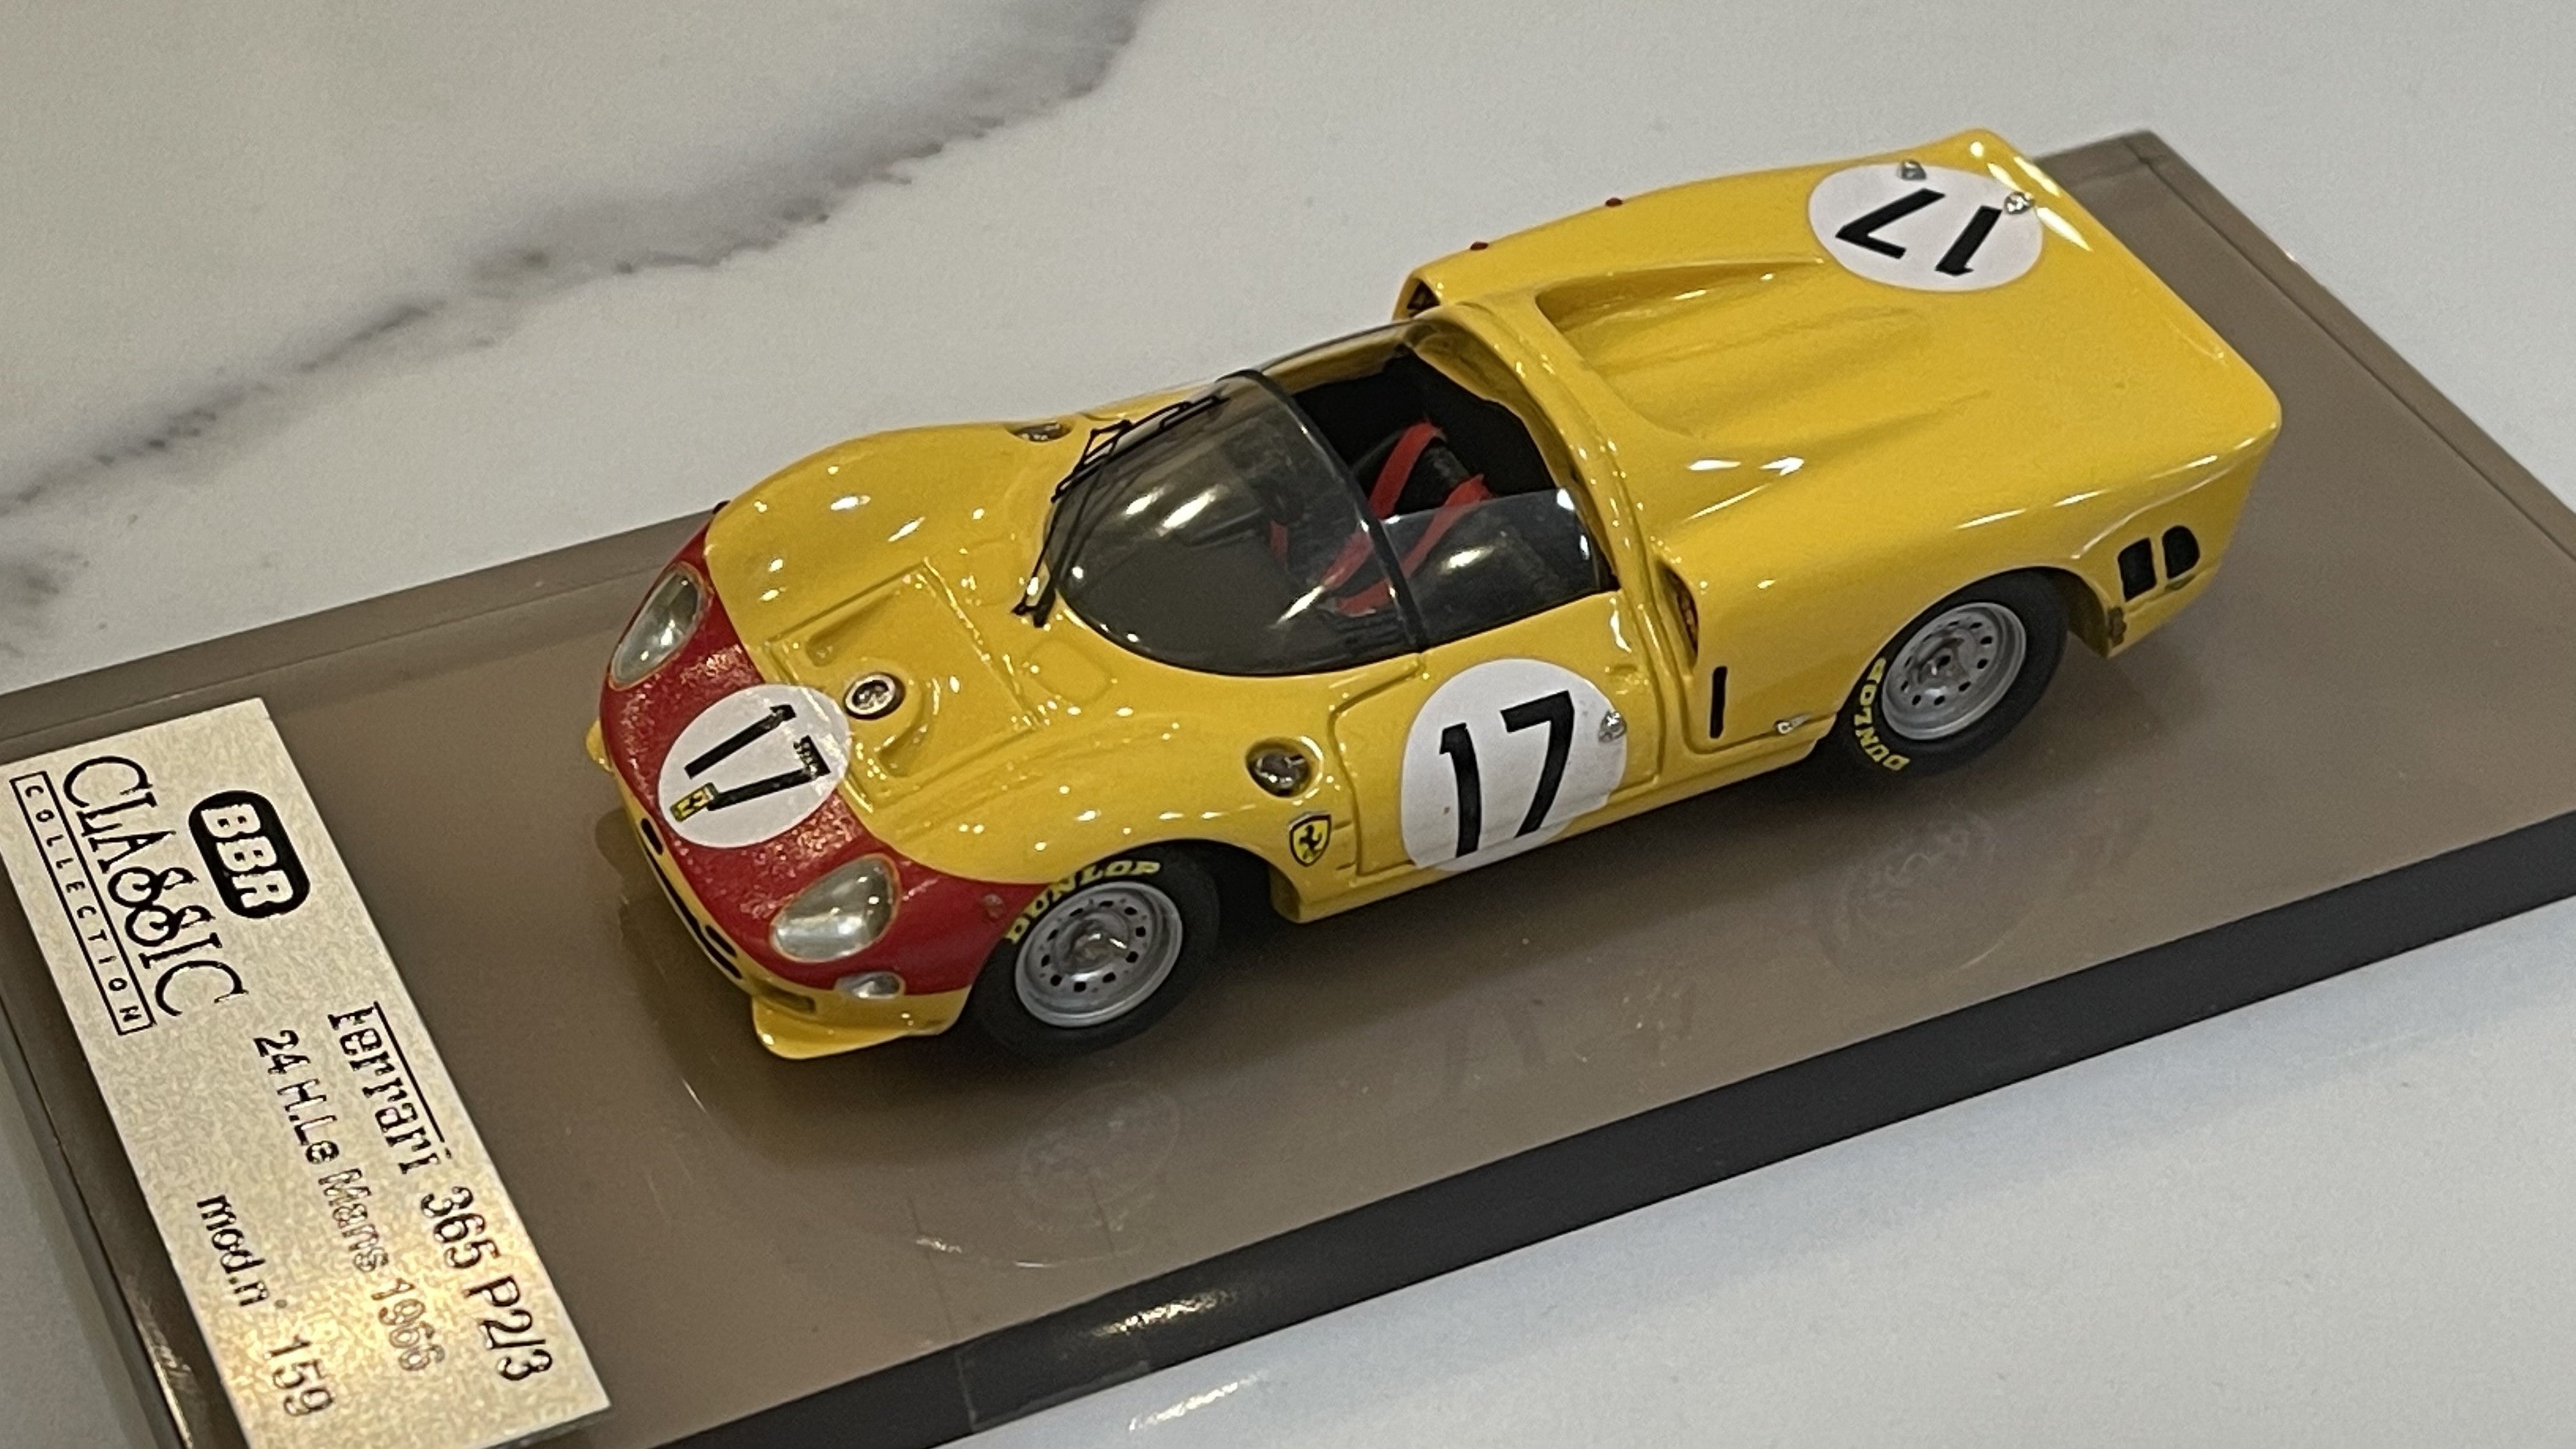 BBR 1/43 Ferrari 365 P2/3 24 Hours Le Mans 1966 Yellow No. 17 BC06